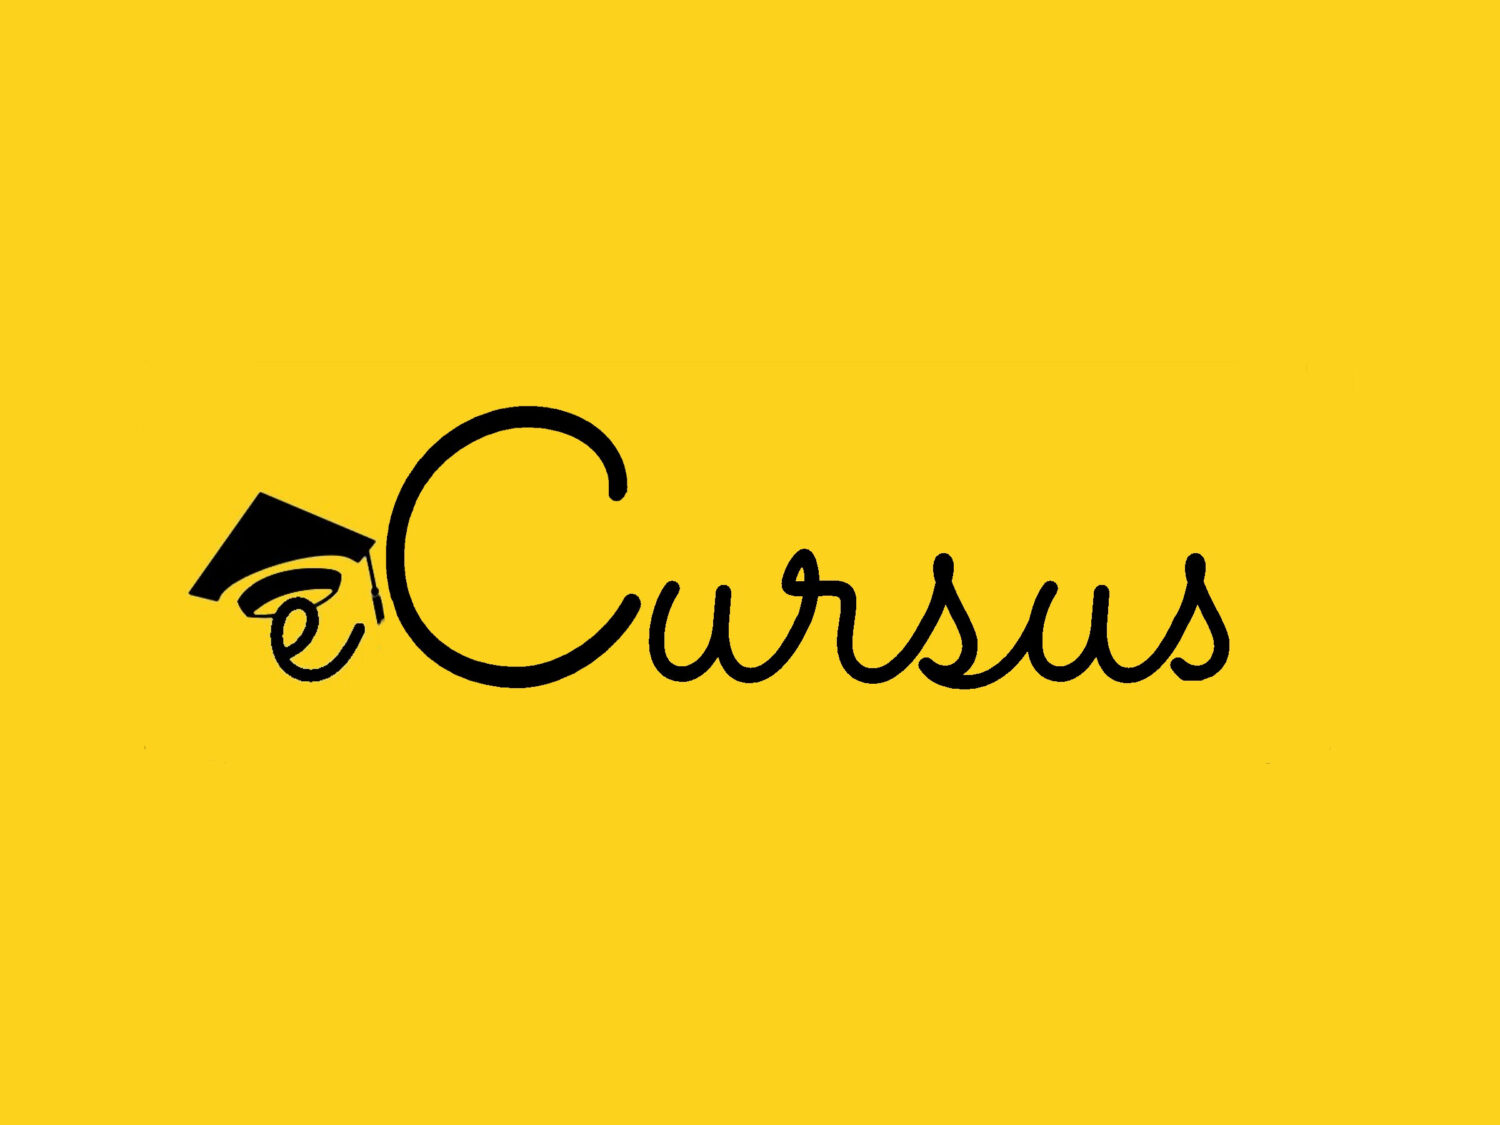 Logo de la startup eCursus